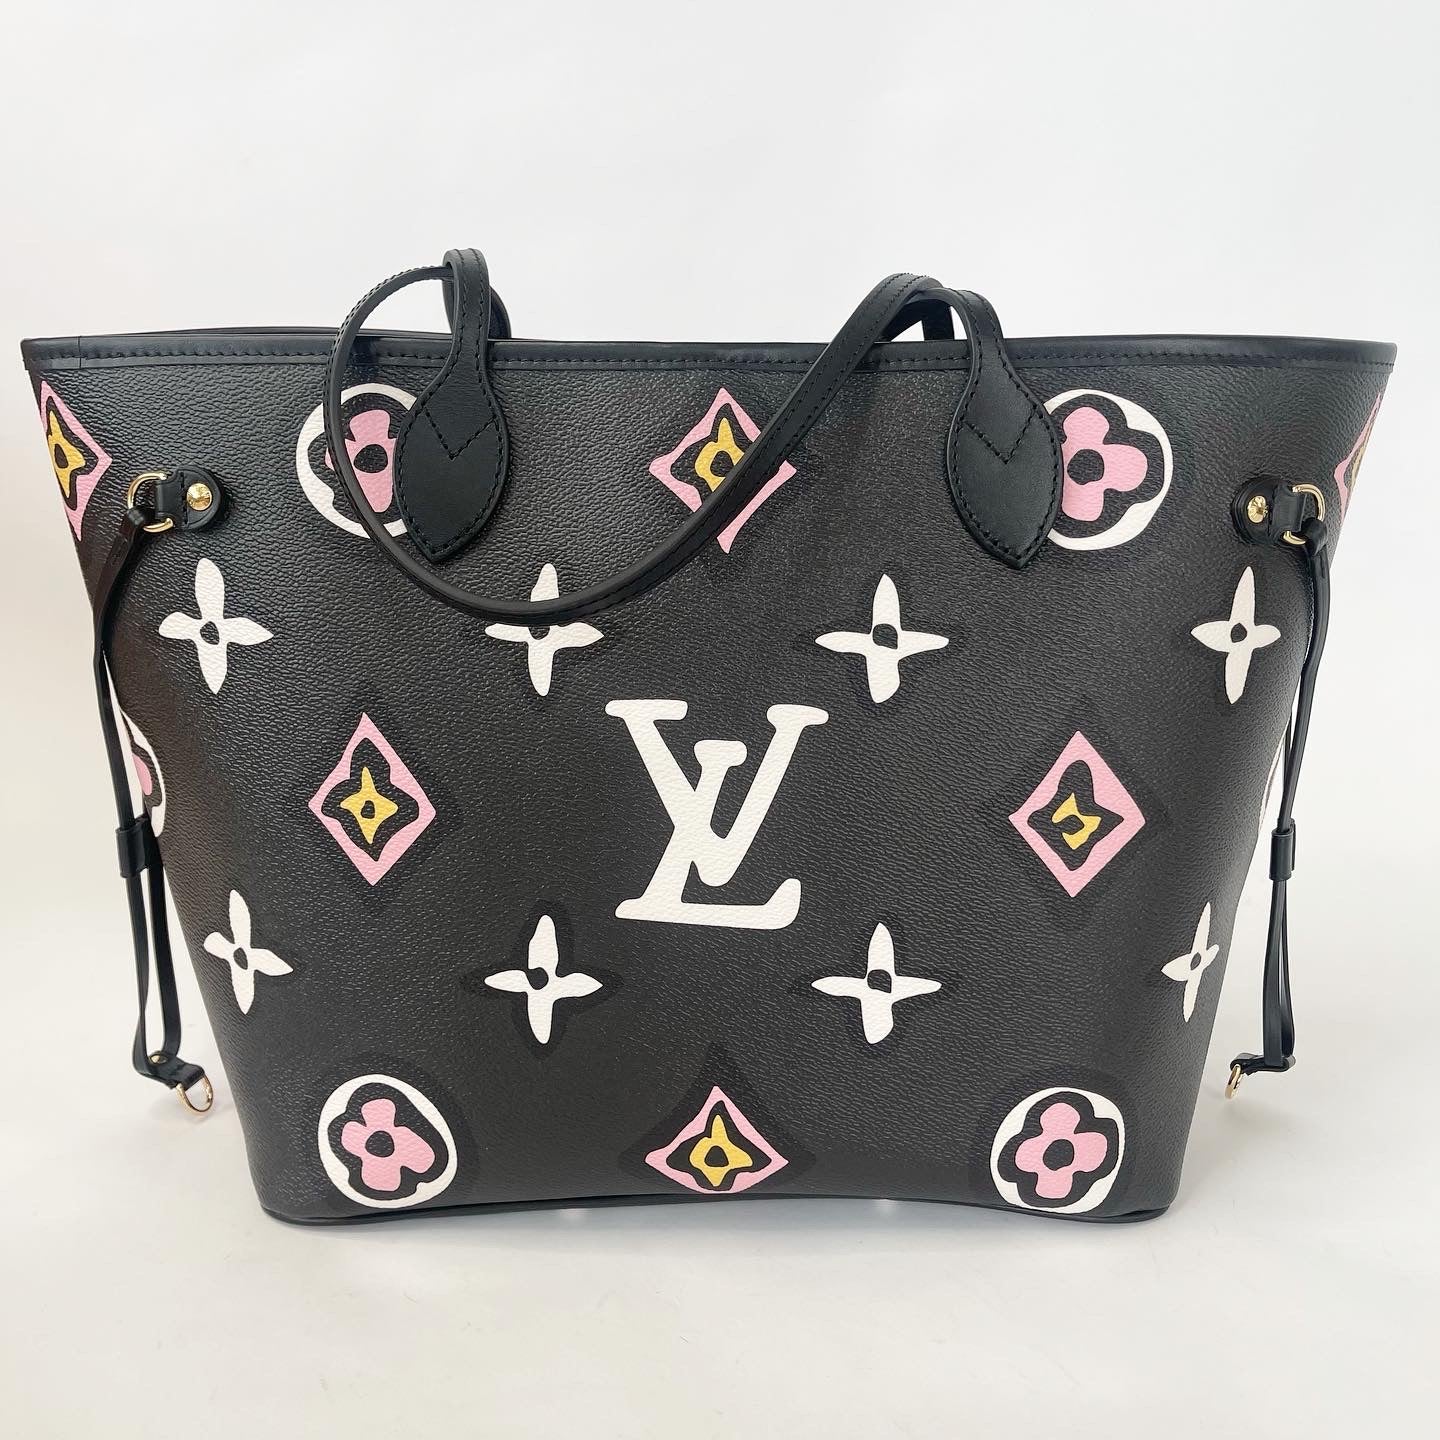 Louis Vuitton Black Monogram Wild at Heart Neverfull MM Tote Bag